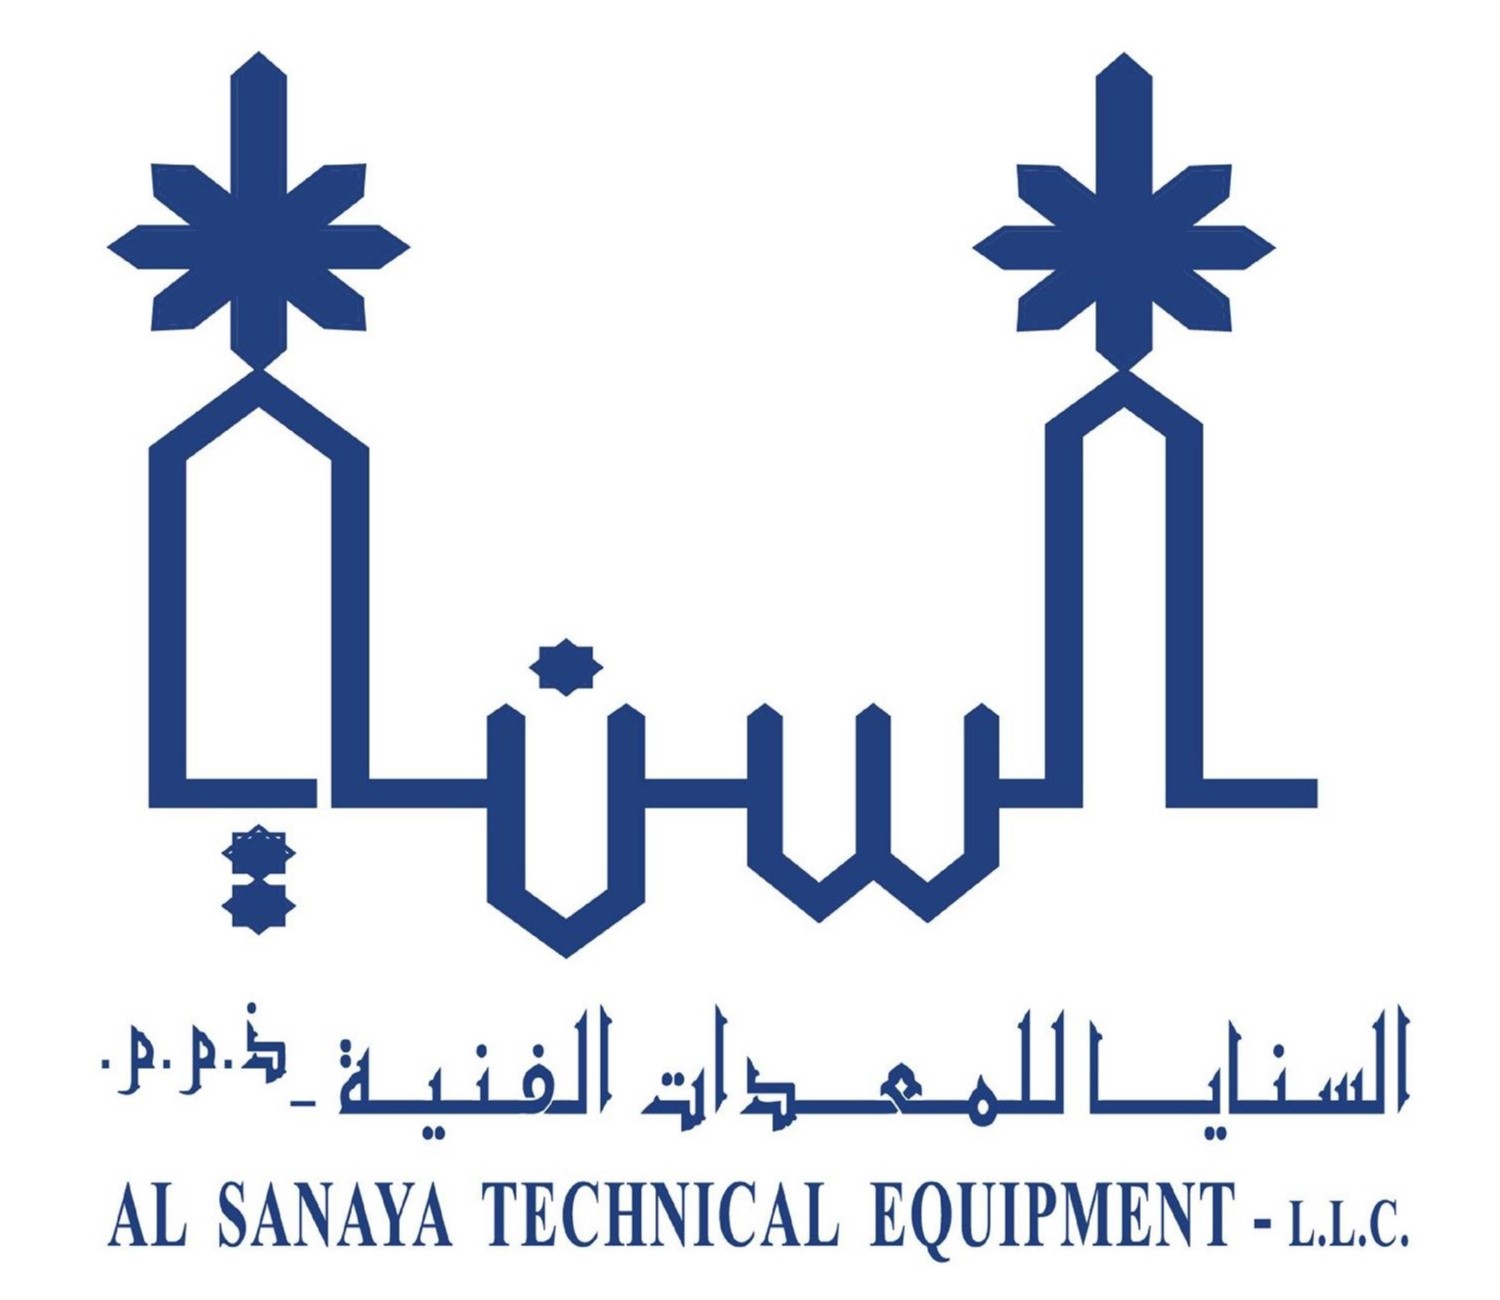 Al Sanaya Technical Equipment